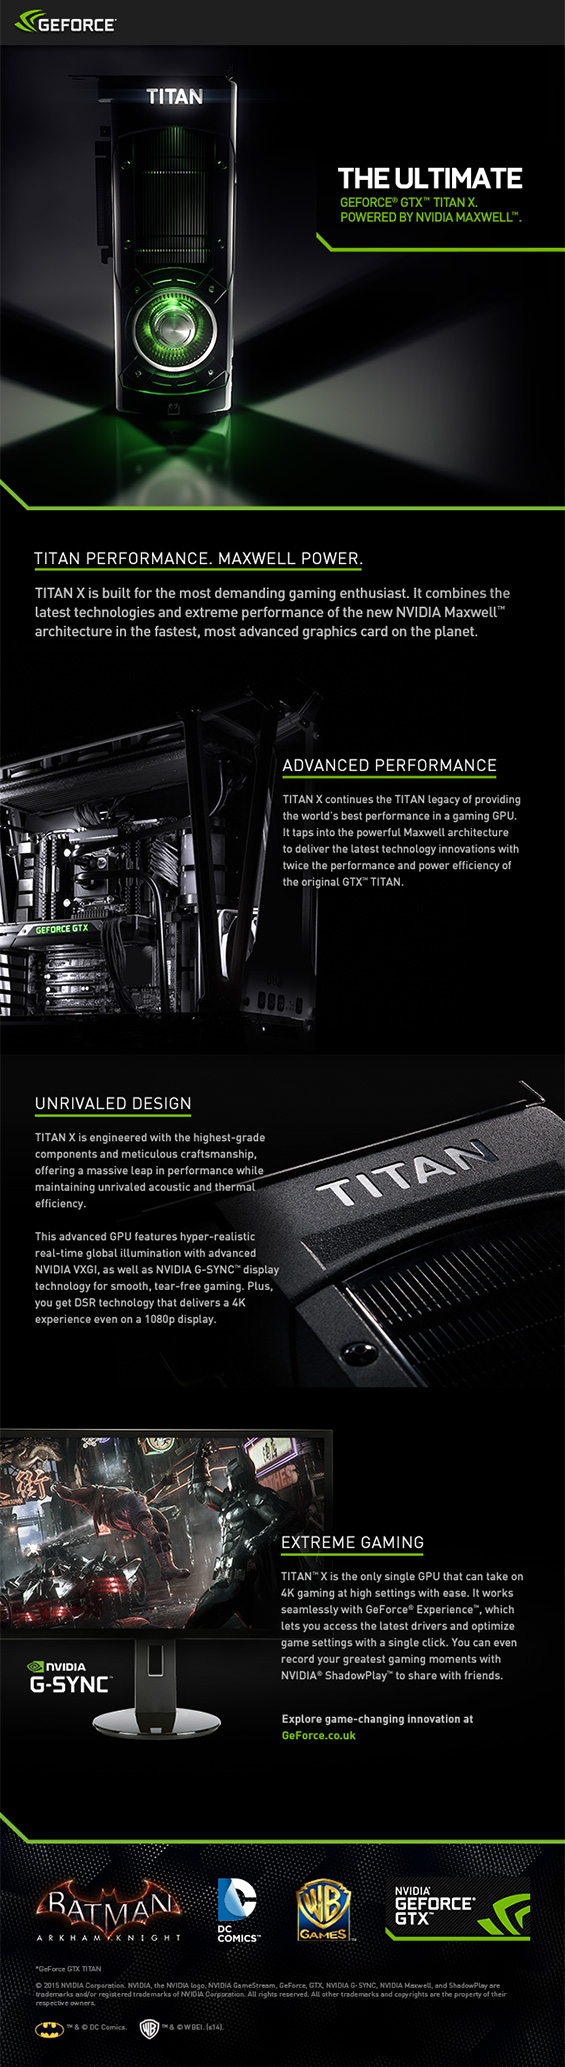 Nvidia GTX Titan X Information